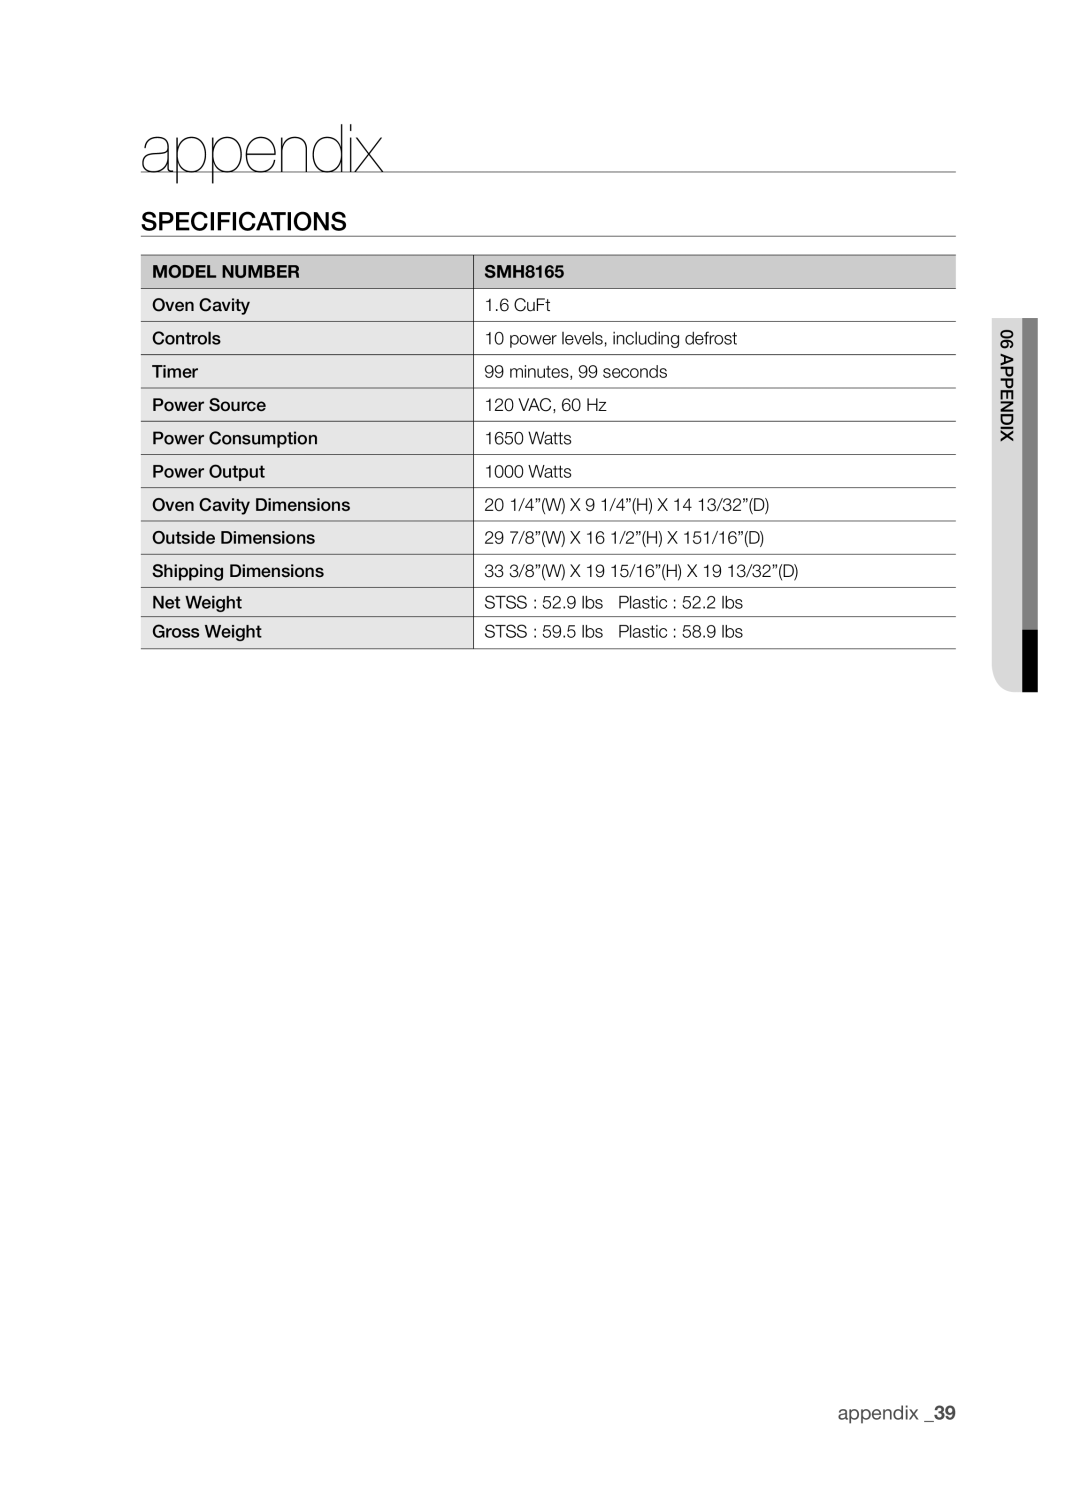 Samsung SMH8165STE user manual appendix, Specifications, Model Number 